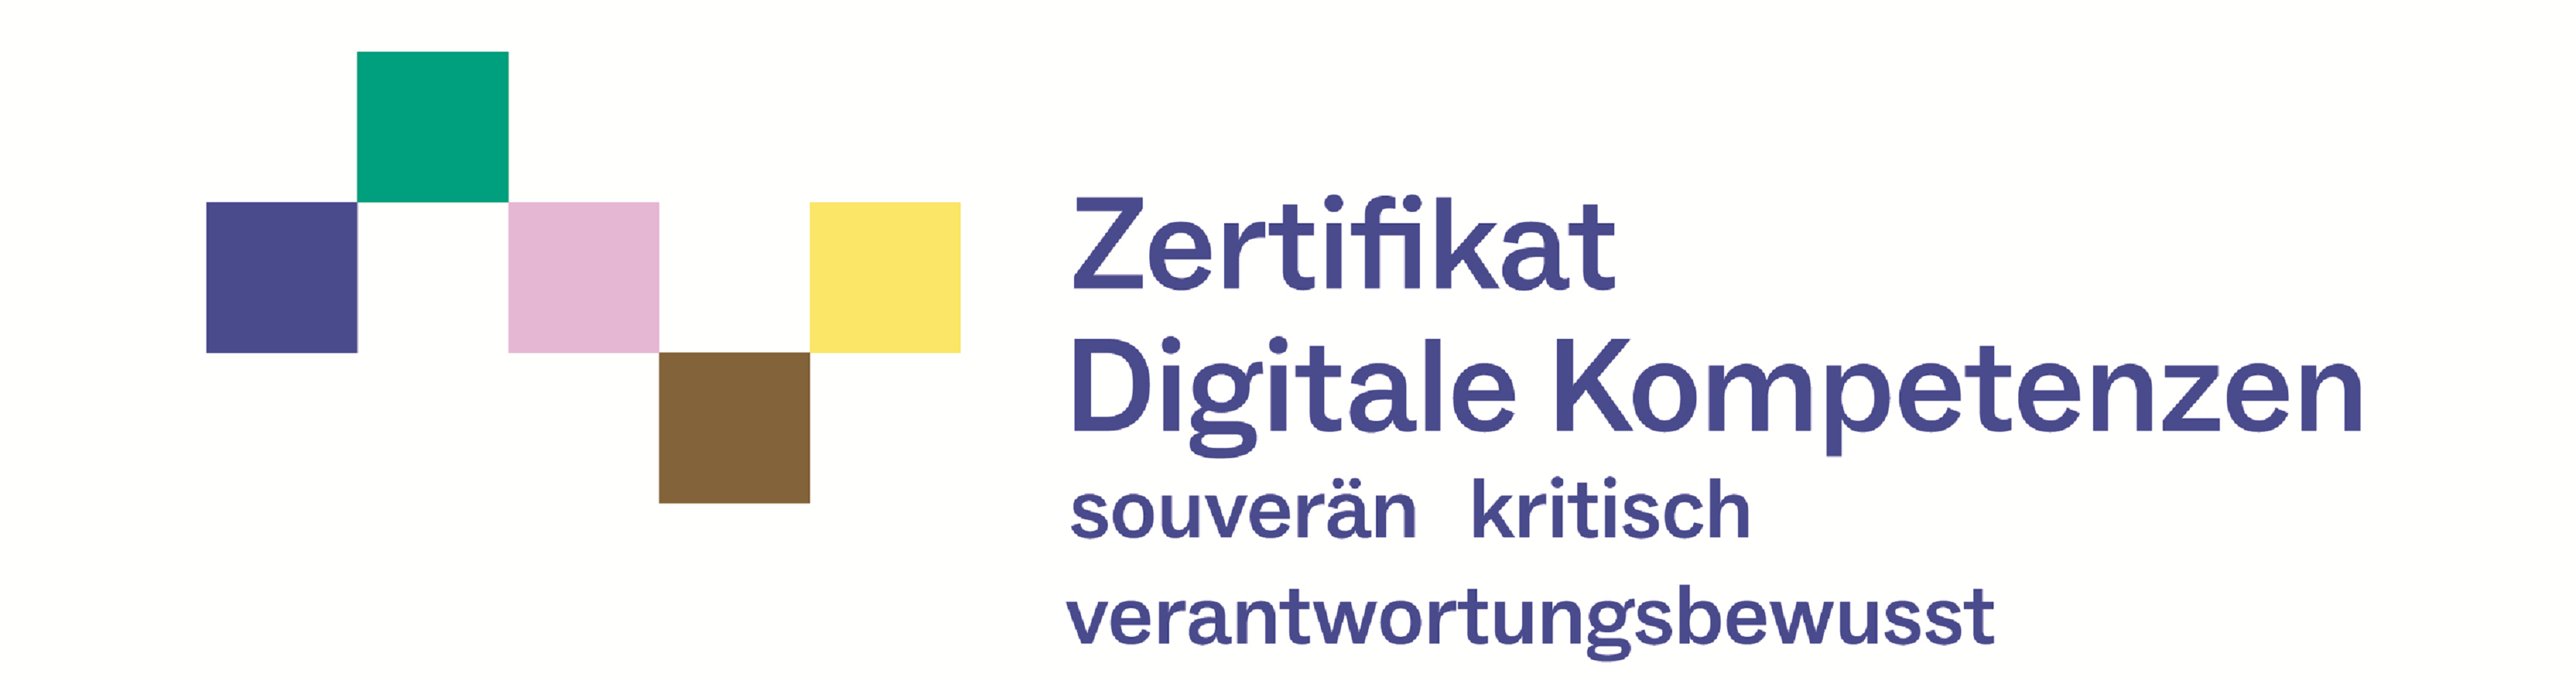 2240116 UF Zertifikat Digitale Kompetenzen Unterzeile.png